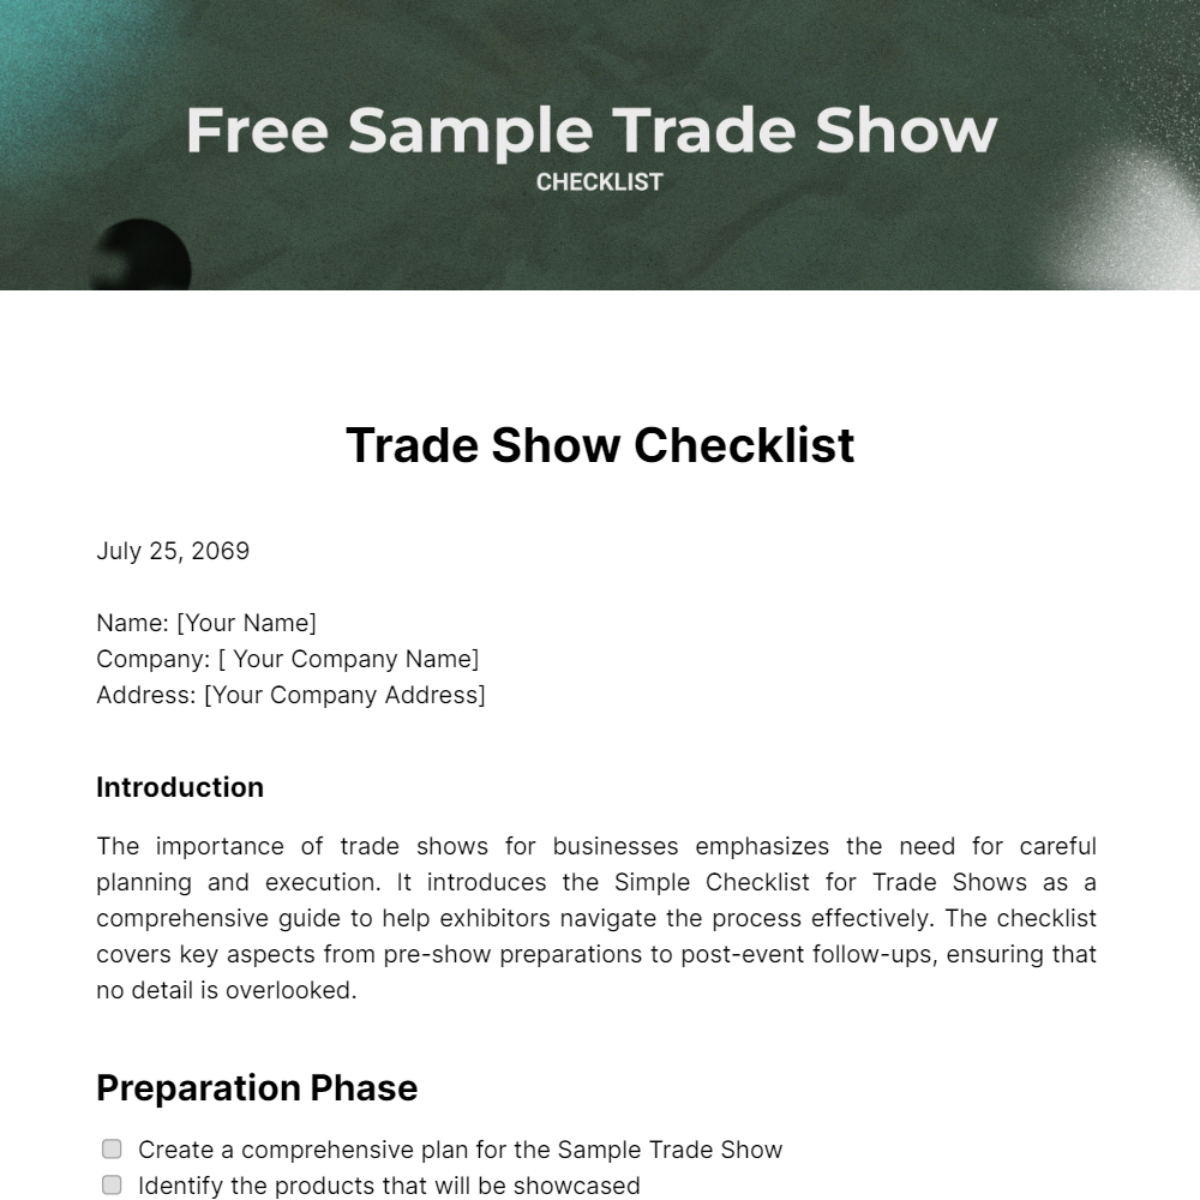 Free Sample Trade Show Checklist Template